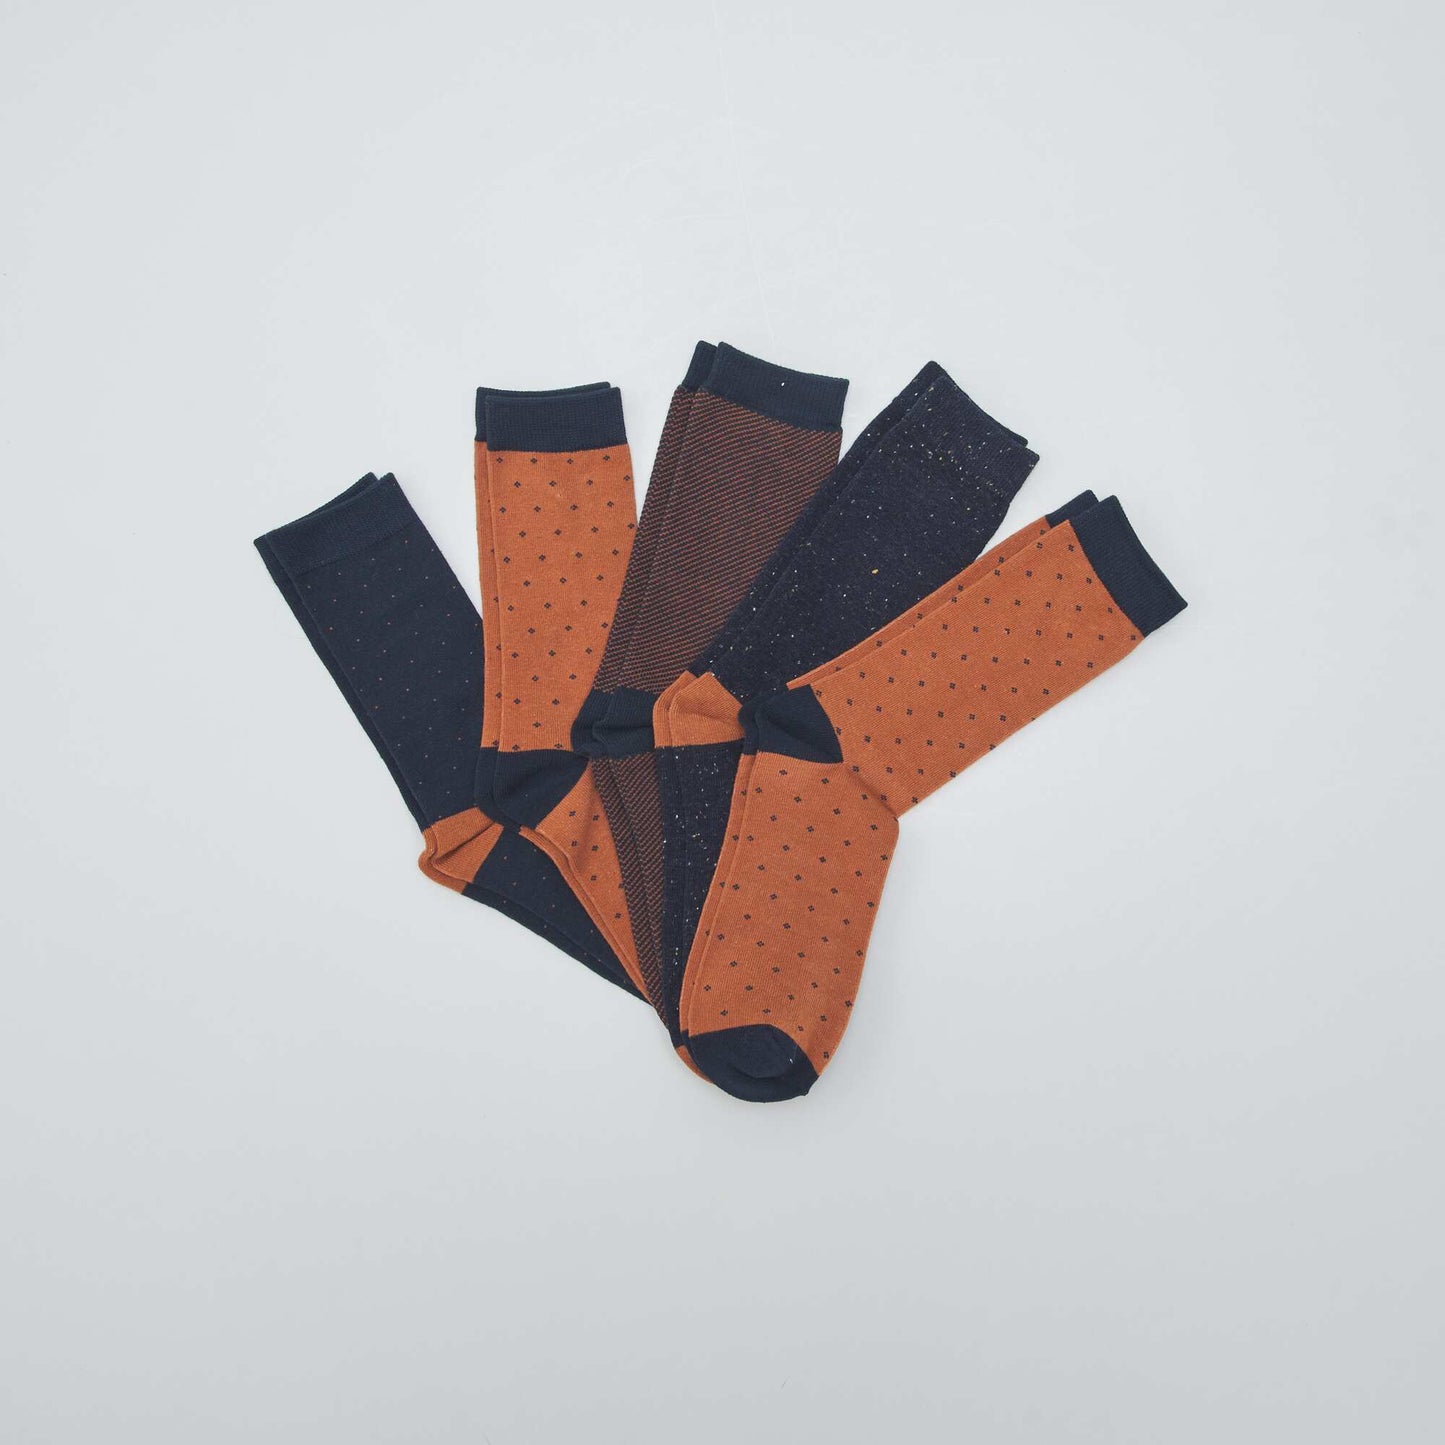 Pack of 5 pairs of fancy socks MOCHA